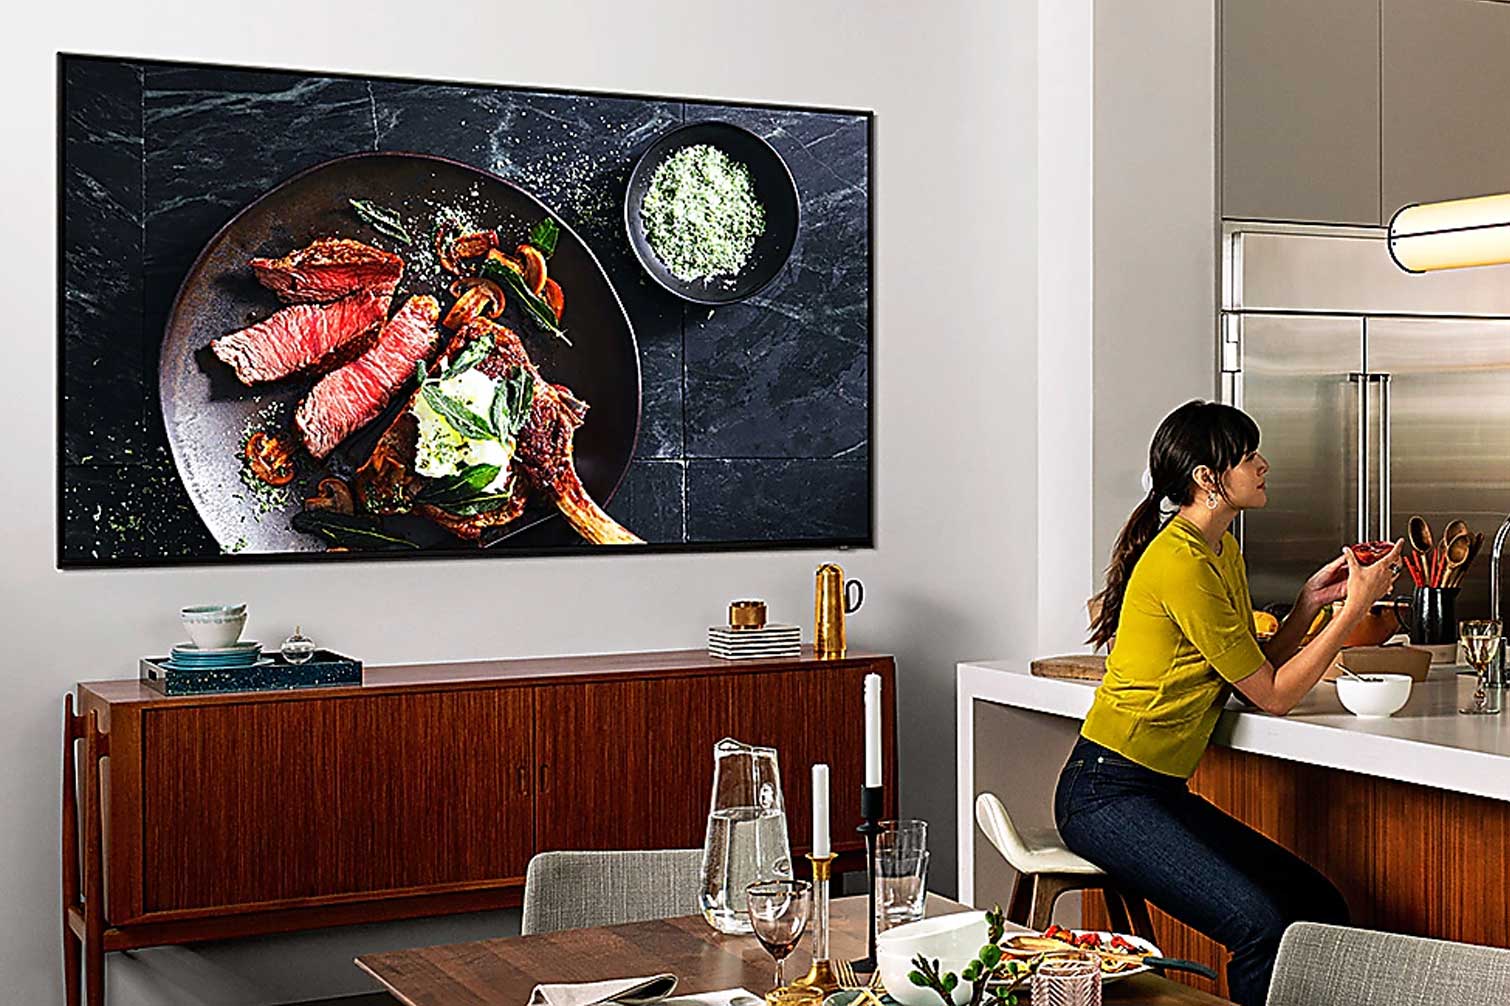 QLED Tivi 8K Samsung 55Q900R 55 inch Smart TV